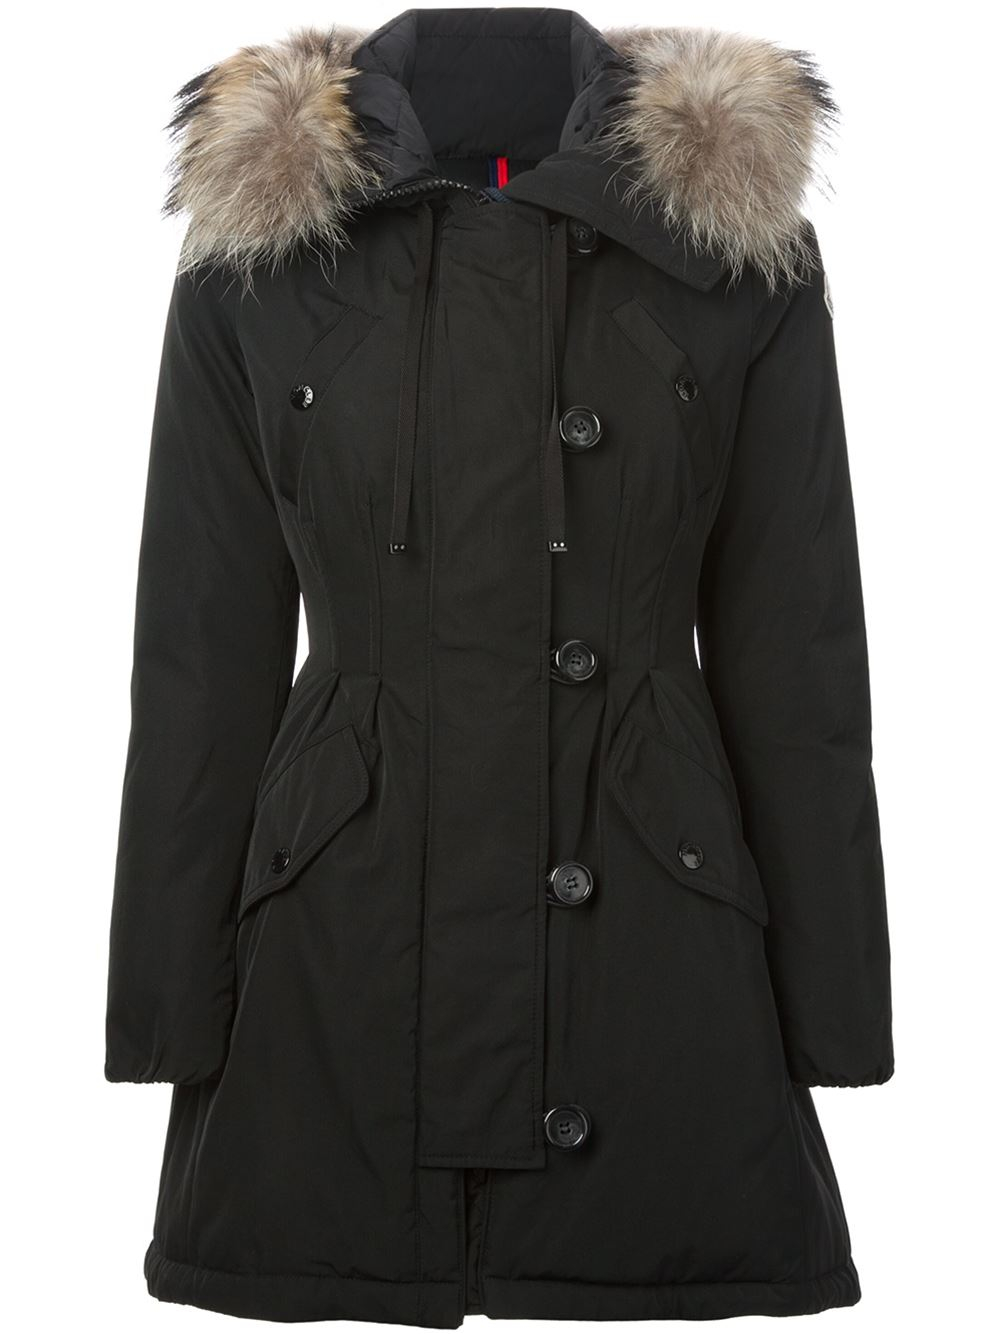 Moncler Arrious Coat in Black - Lyst